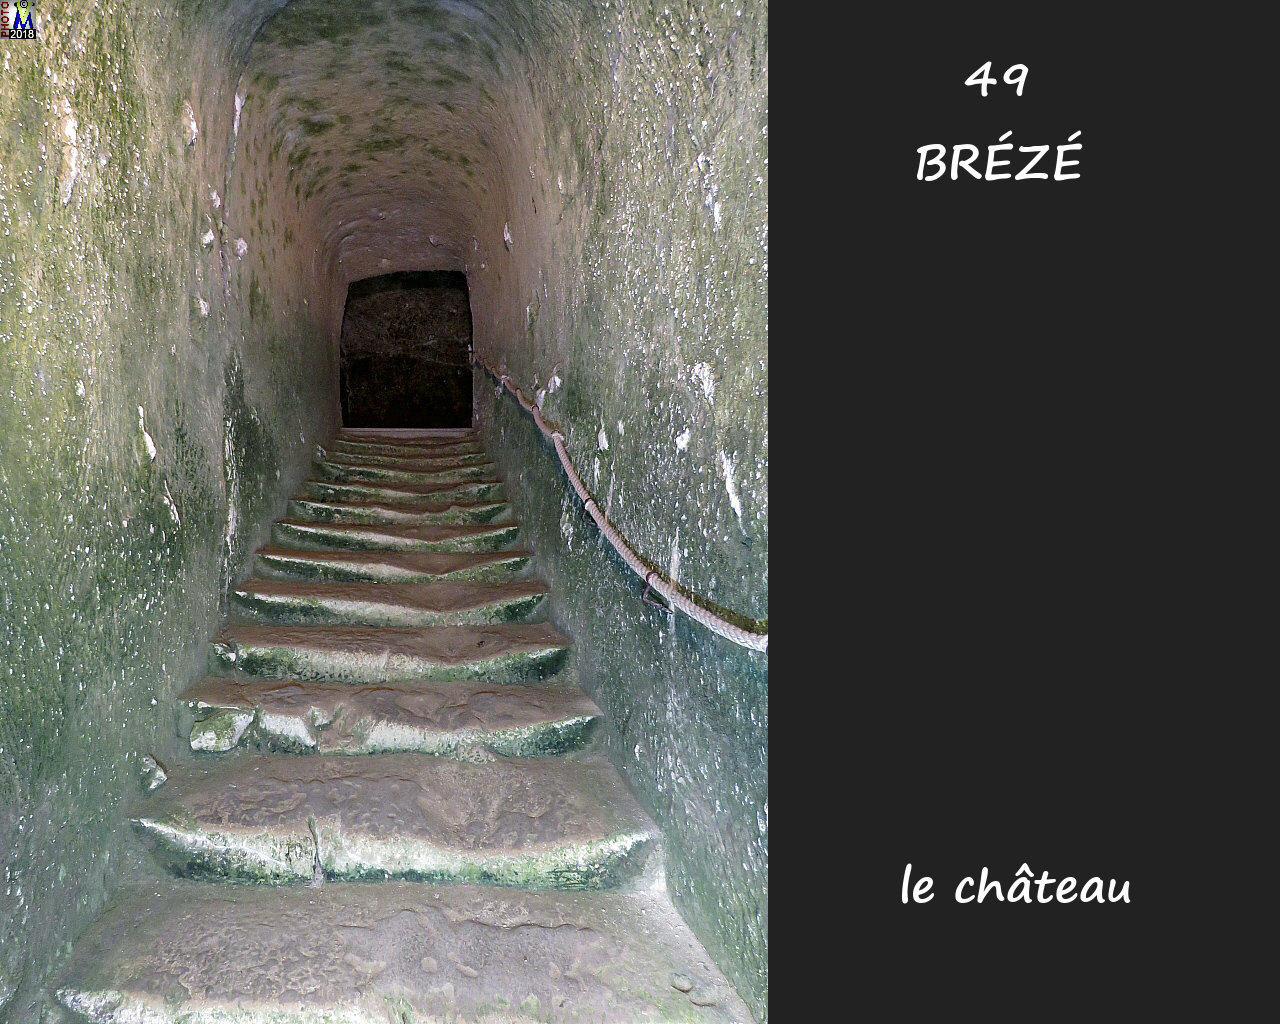 49BREZE_chateau_1336.jpg